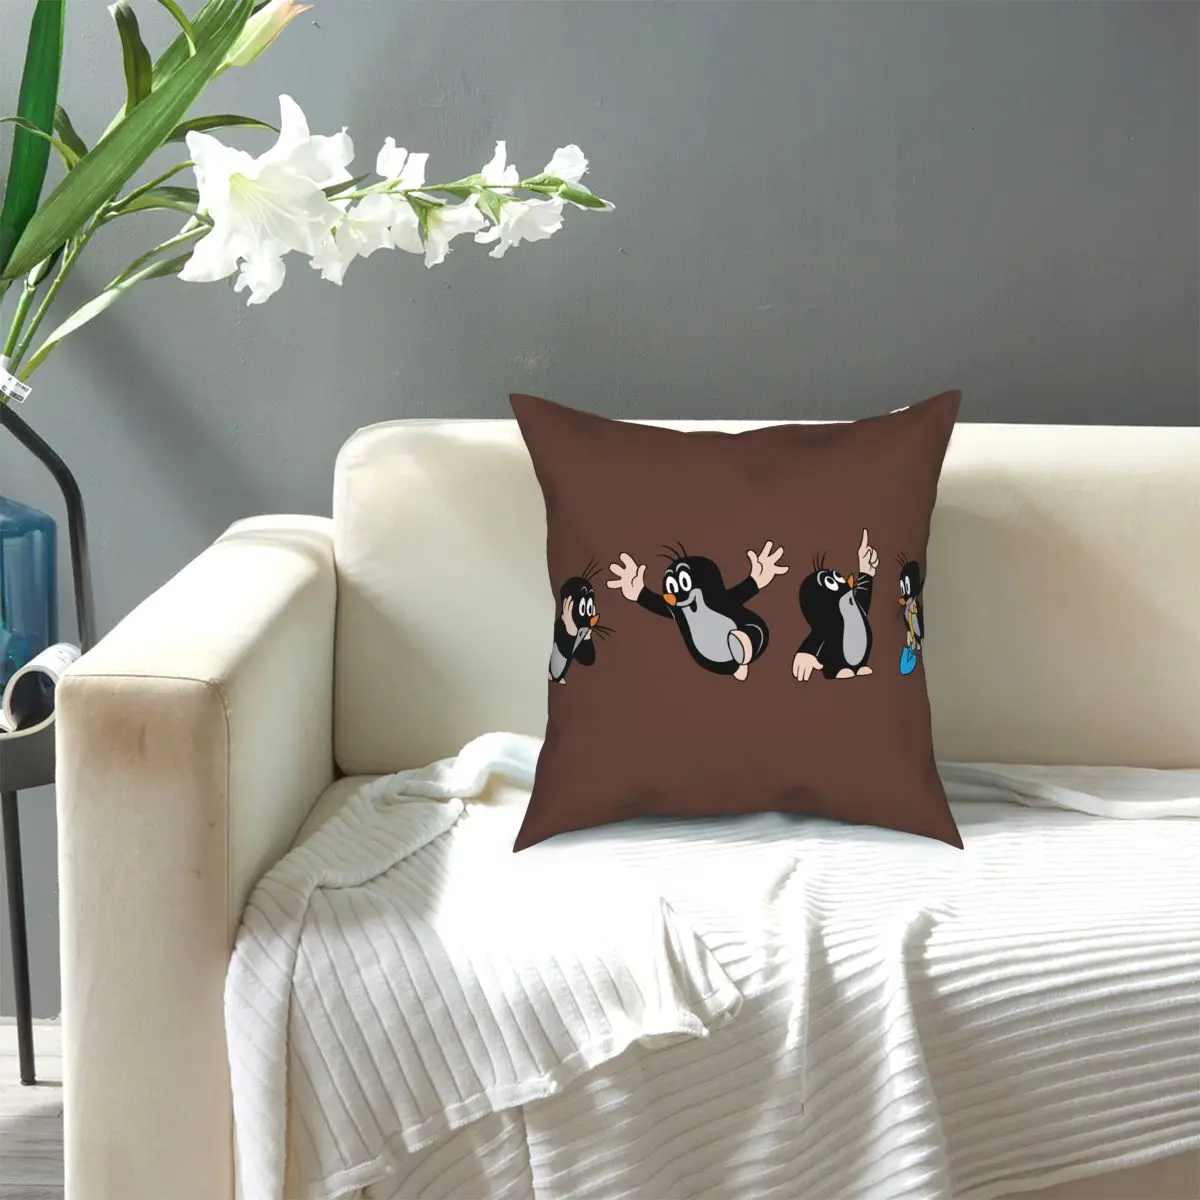 European Mole Comics Pillowcase Home Decorative Krtek Little Maulwurf Cushions Throw Pillow for Living Room Double-sided Print images - 6